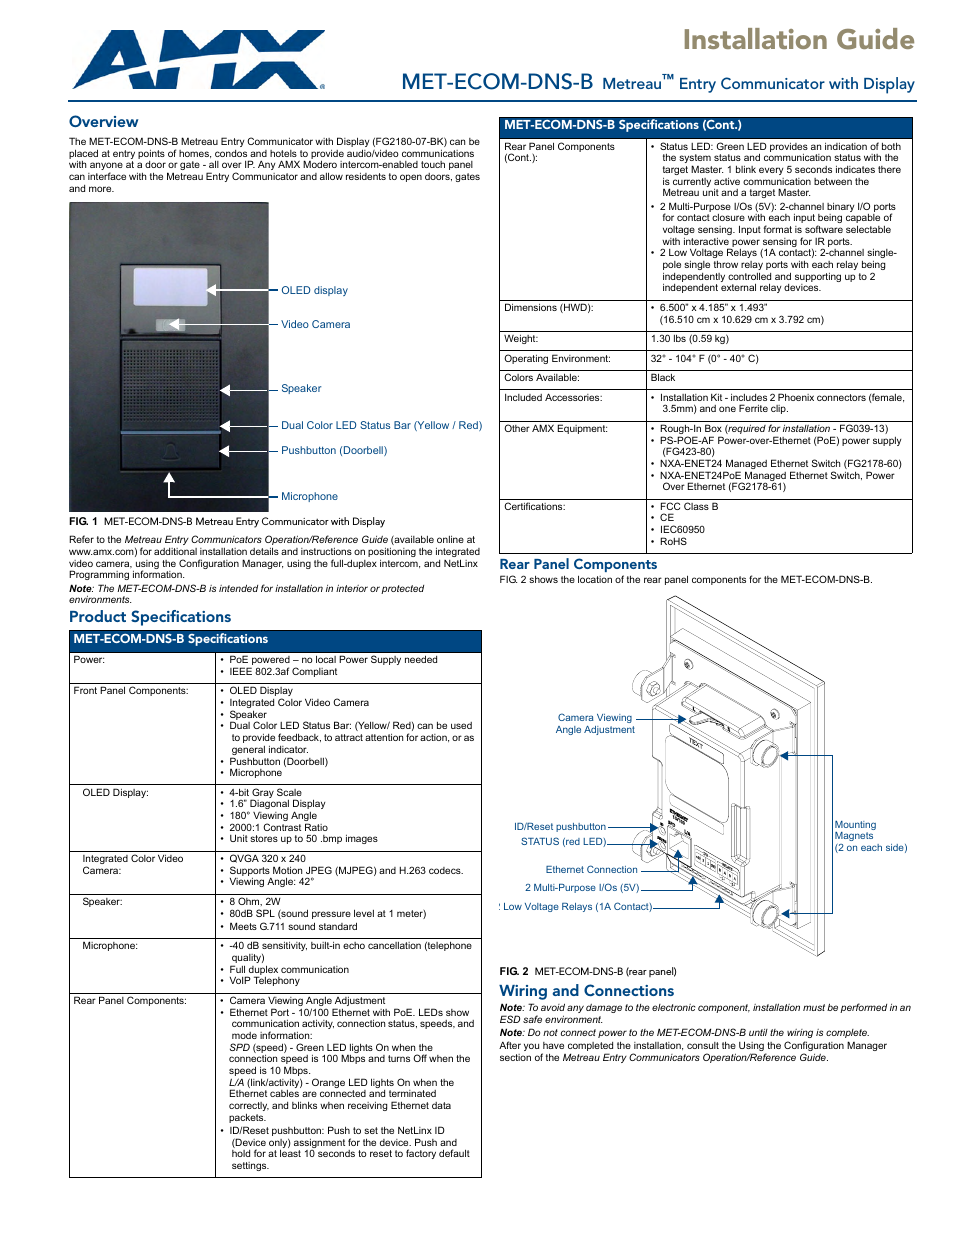 Metreau Entry Communicator with Display MET-ECOM-DNS-B